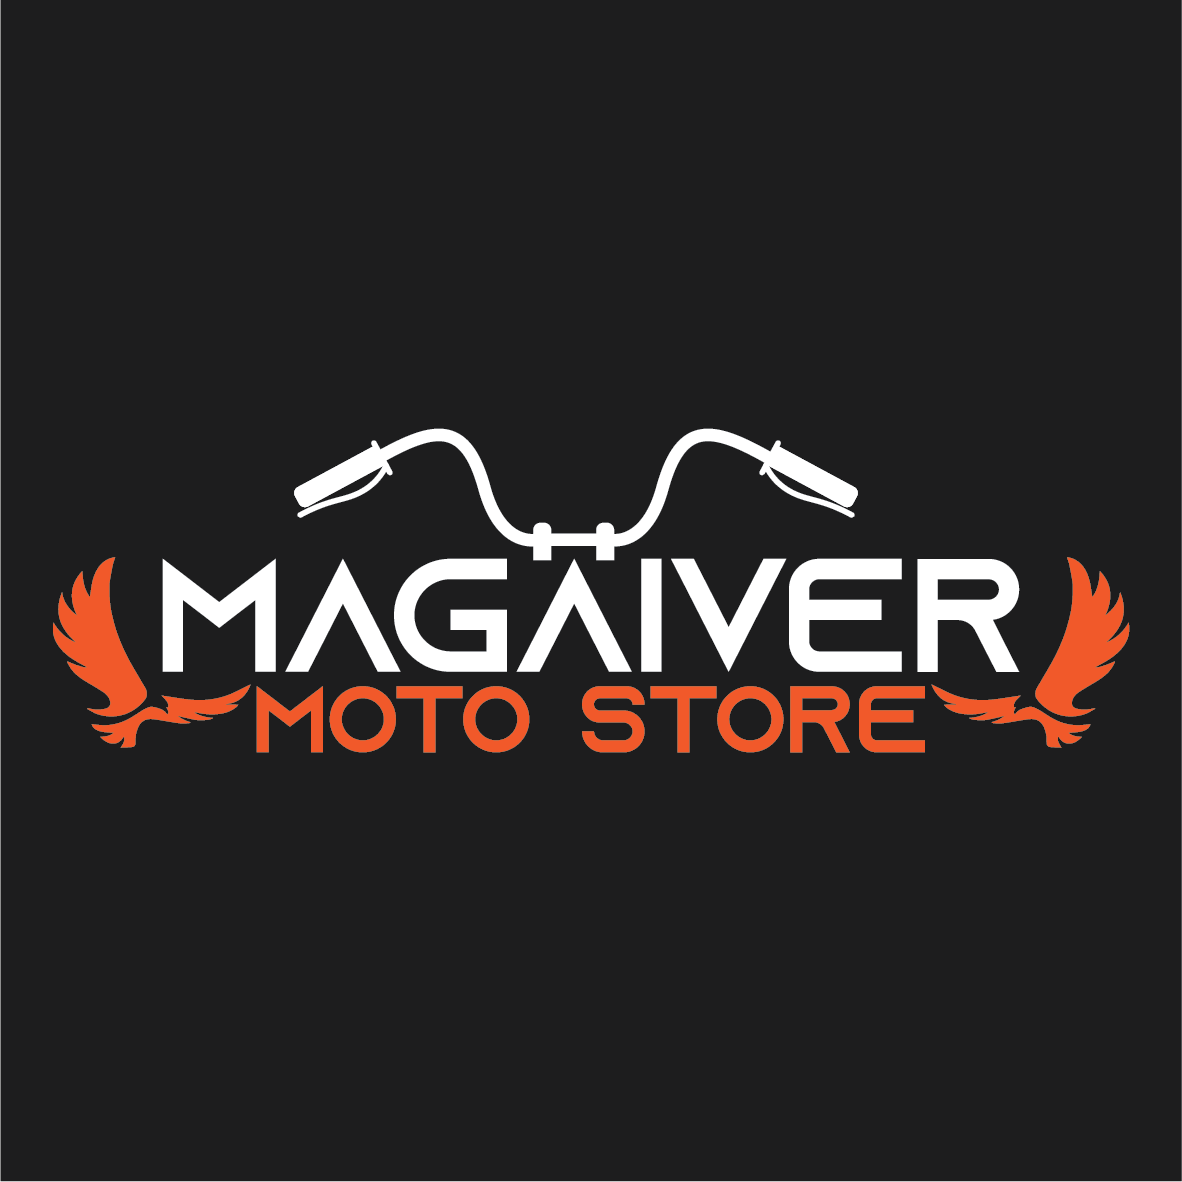 Magaiver Moto Store